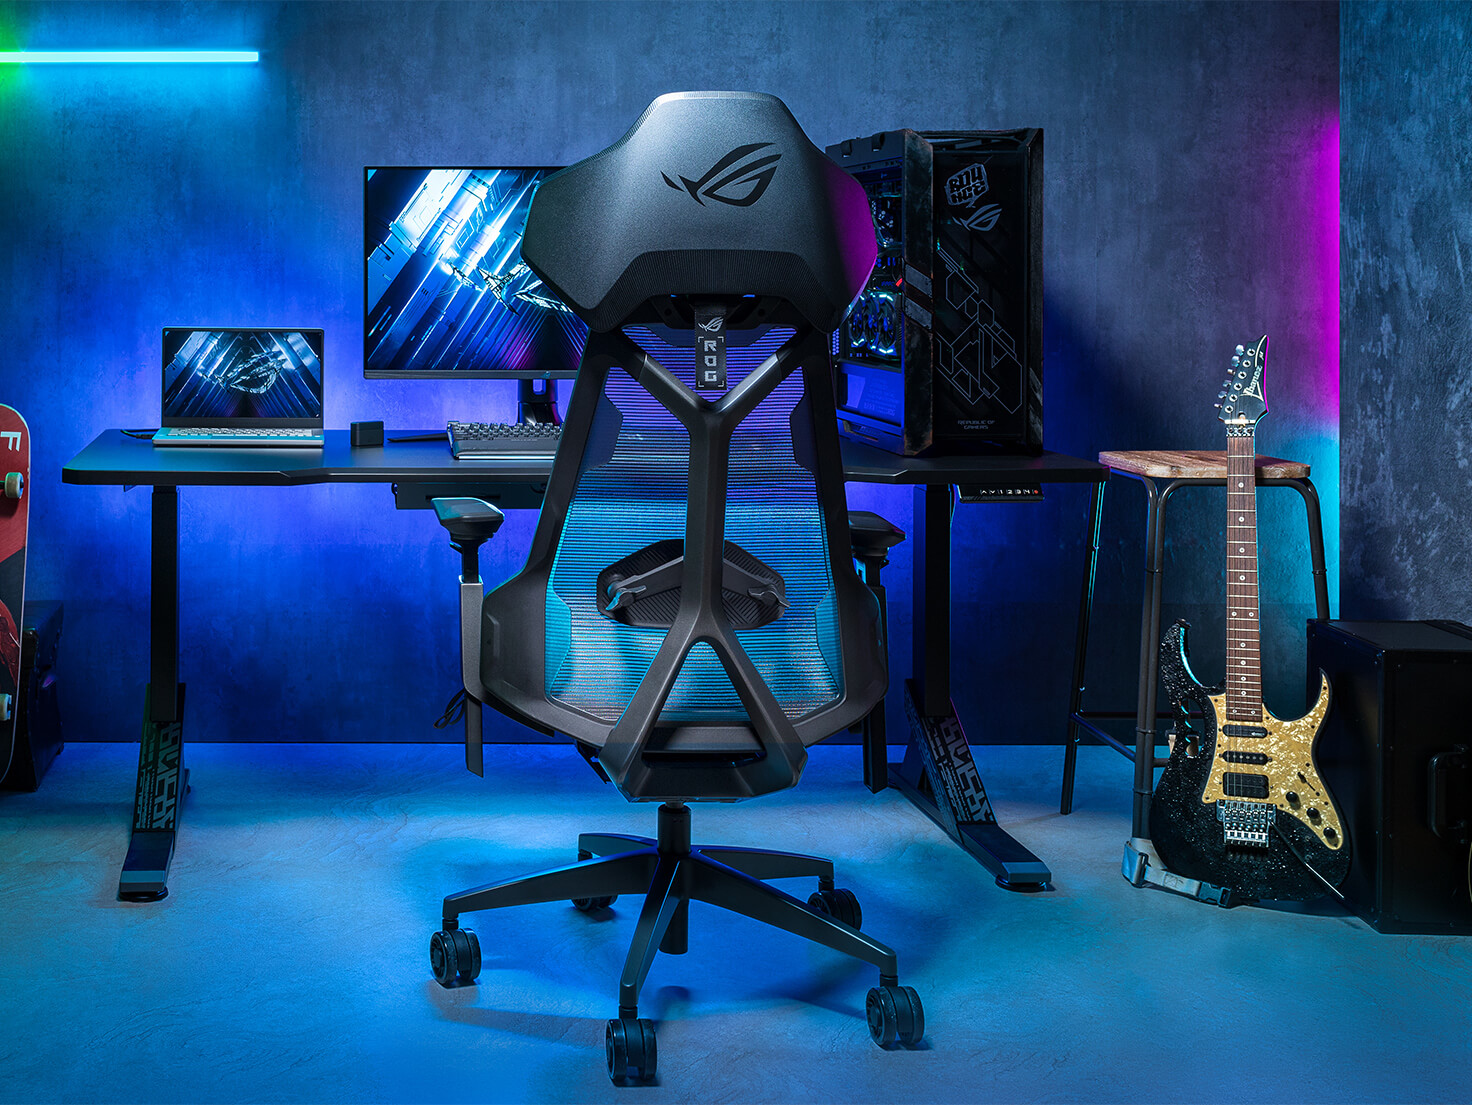 Зображення ROG Destrier Ergo Gaming Chair в ігровій кімнаті, показано алюмінієва рама